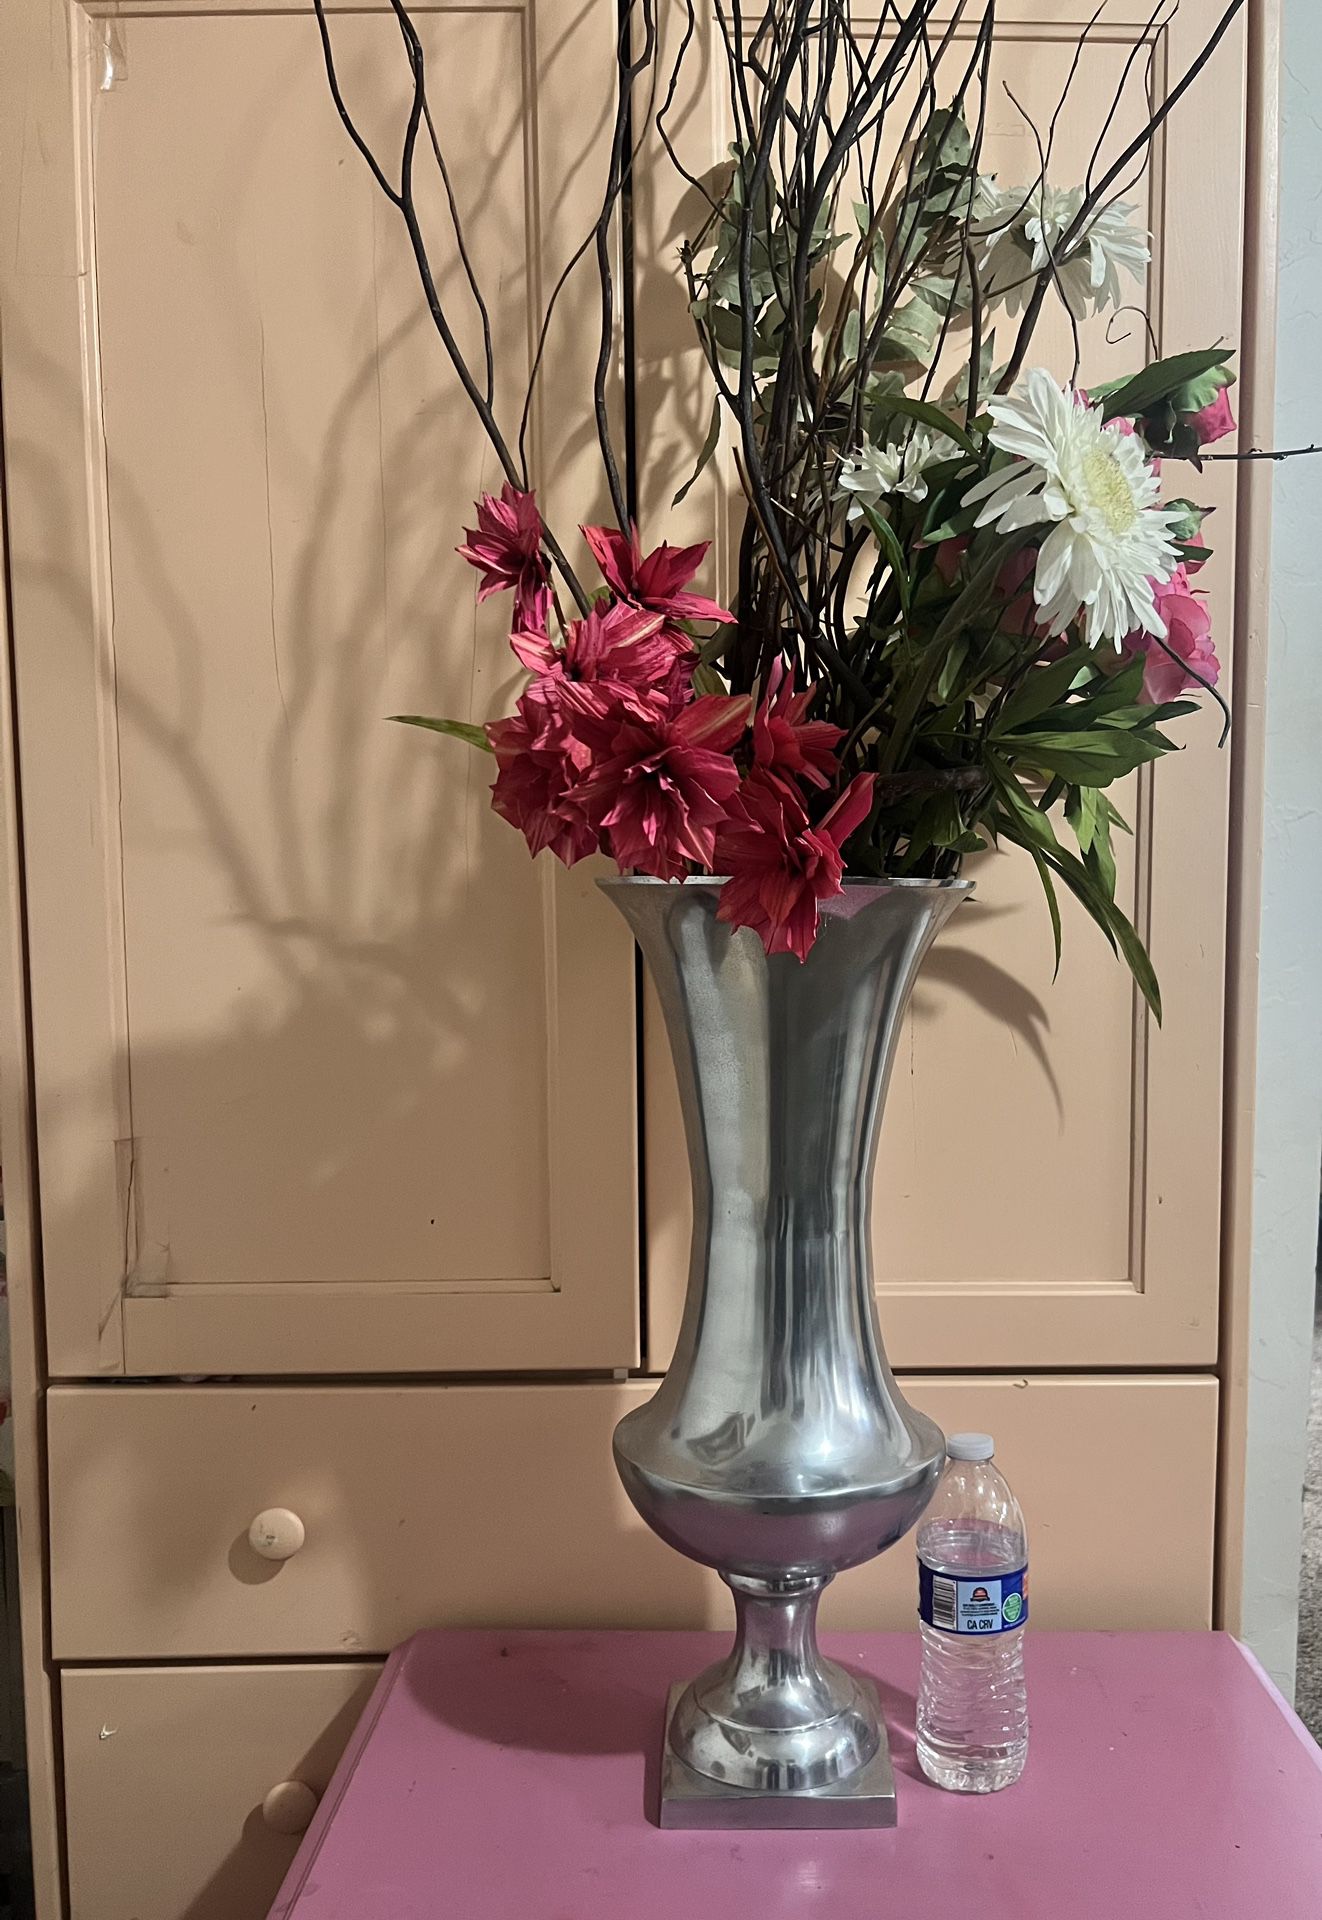 Big Metal Vase With Artificial Flowers